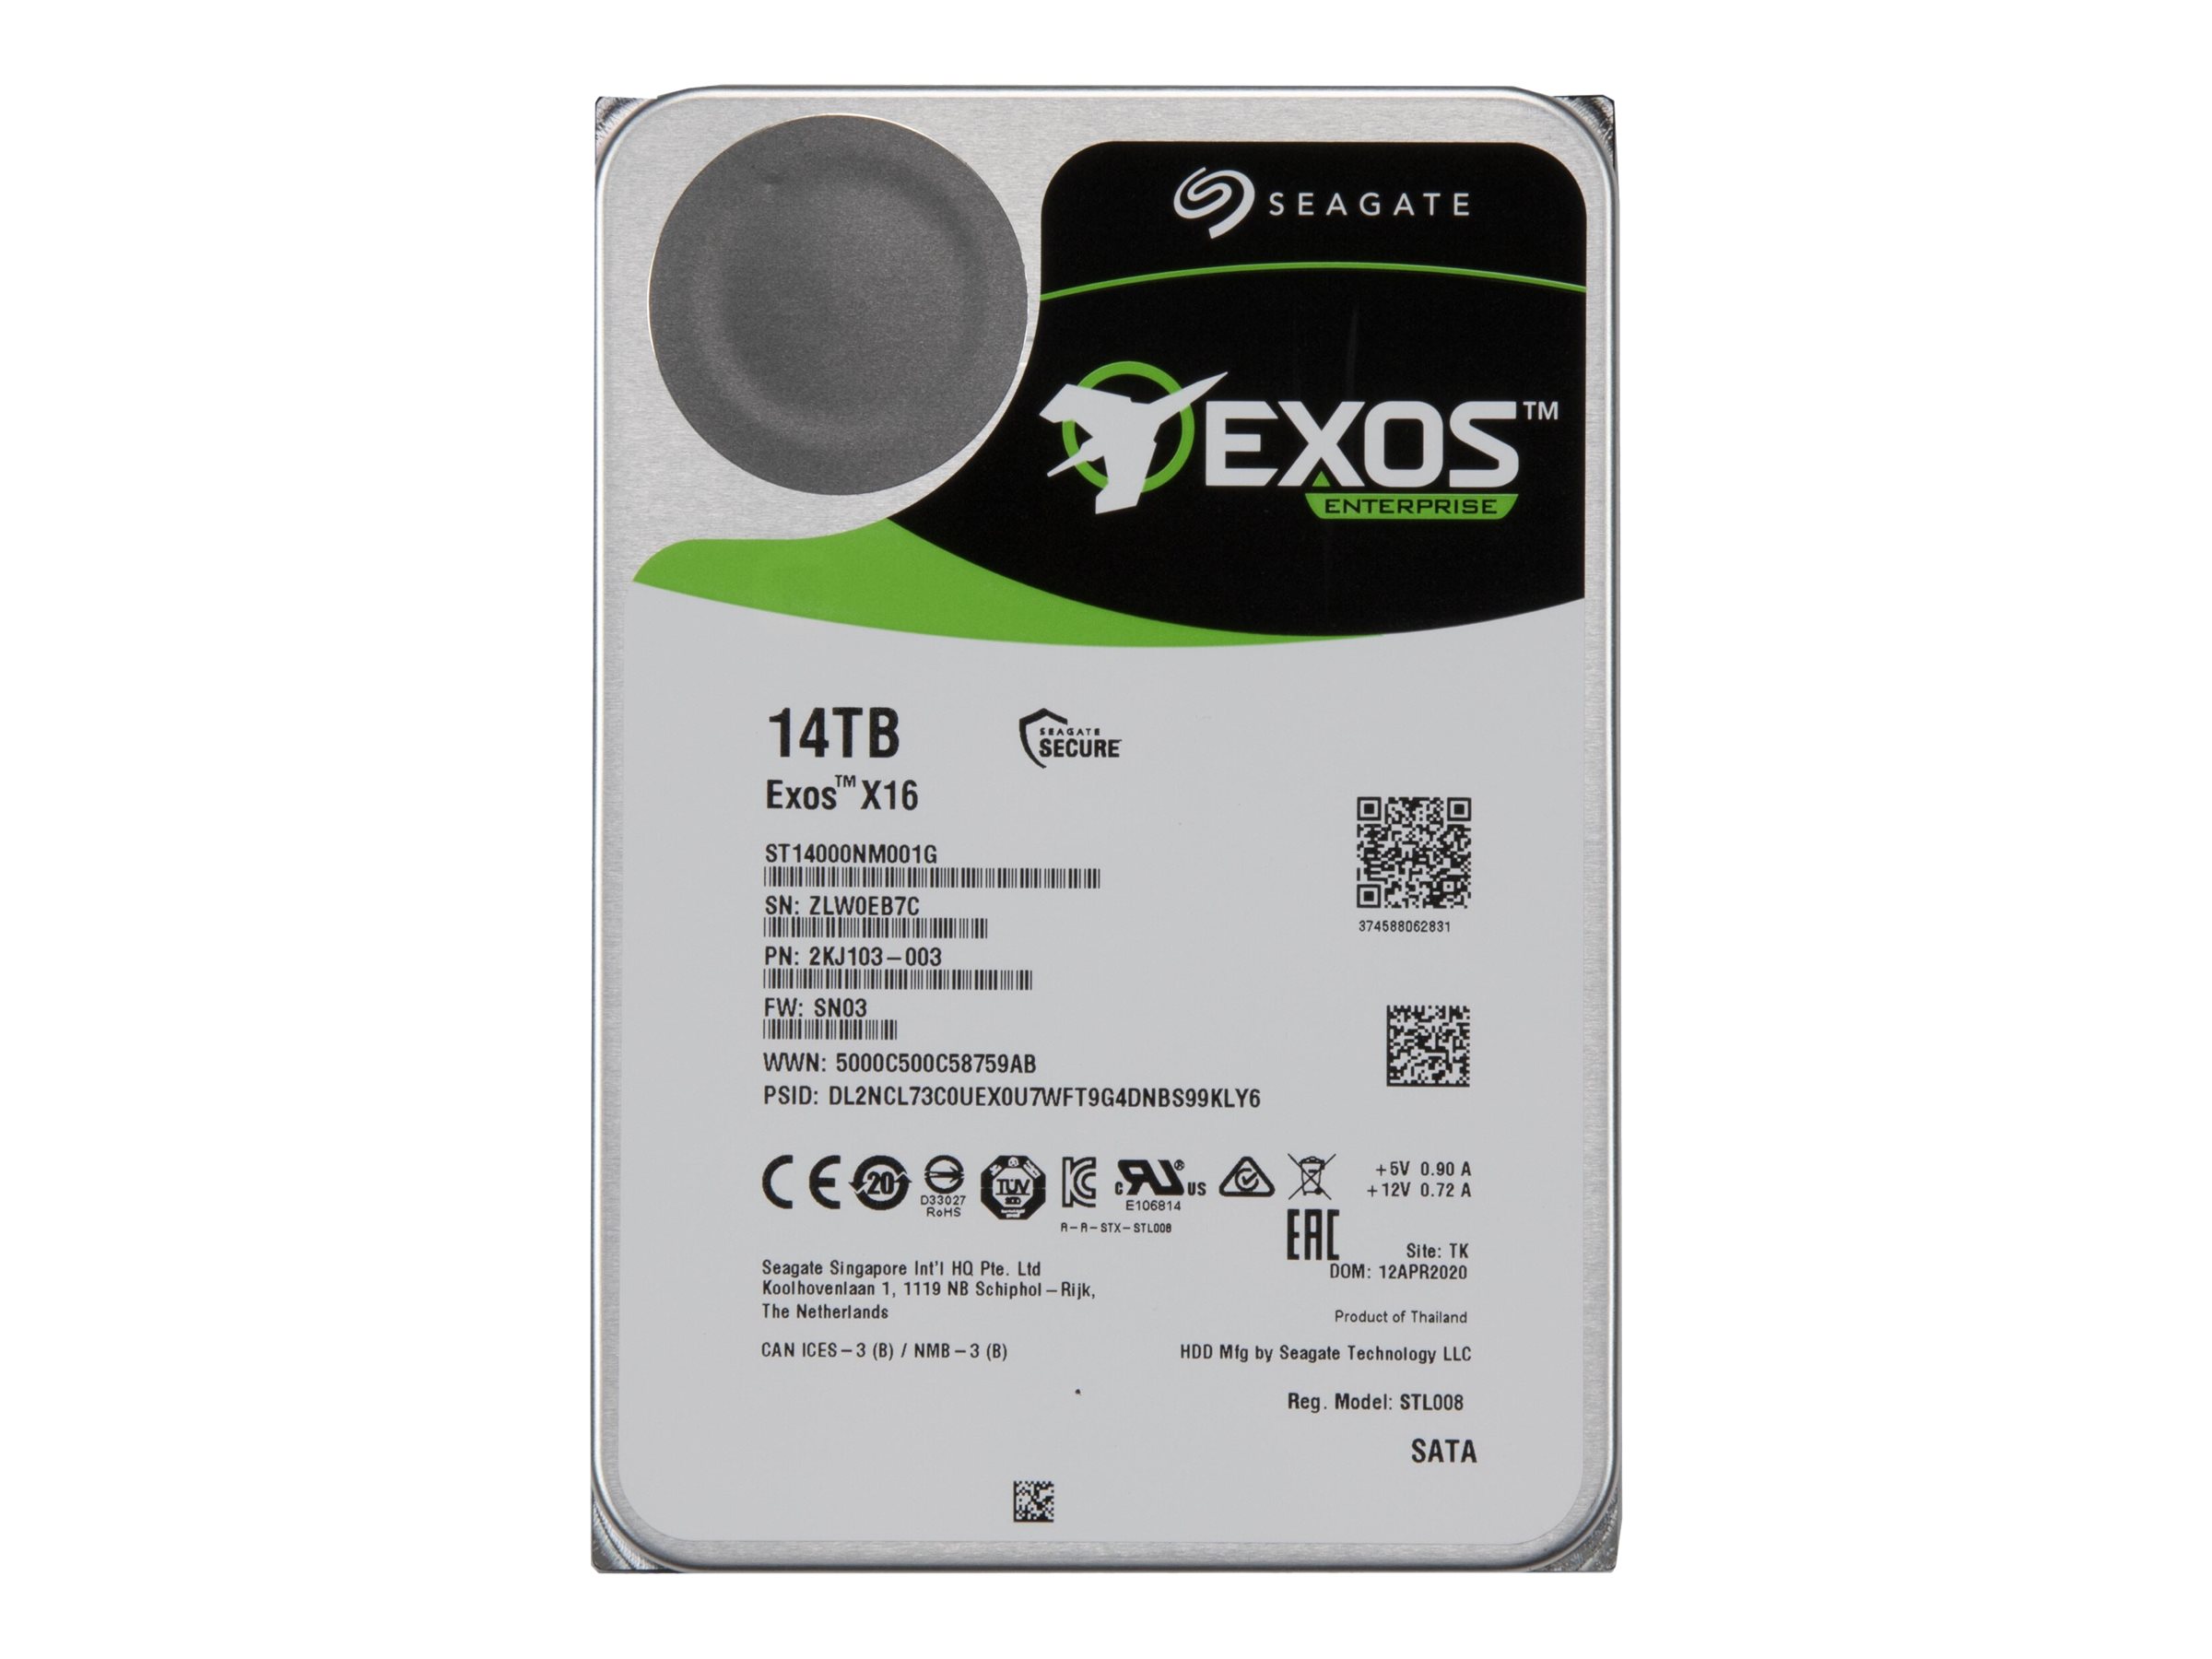 SEAGATE EXOS X16 3.5 14TB 14K HDD Hard Drive Hard Drive ST14000NM001G